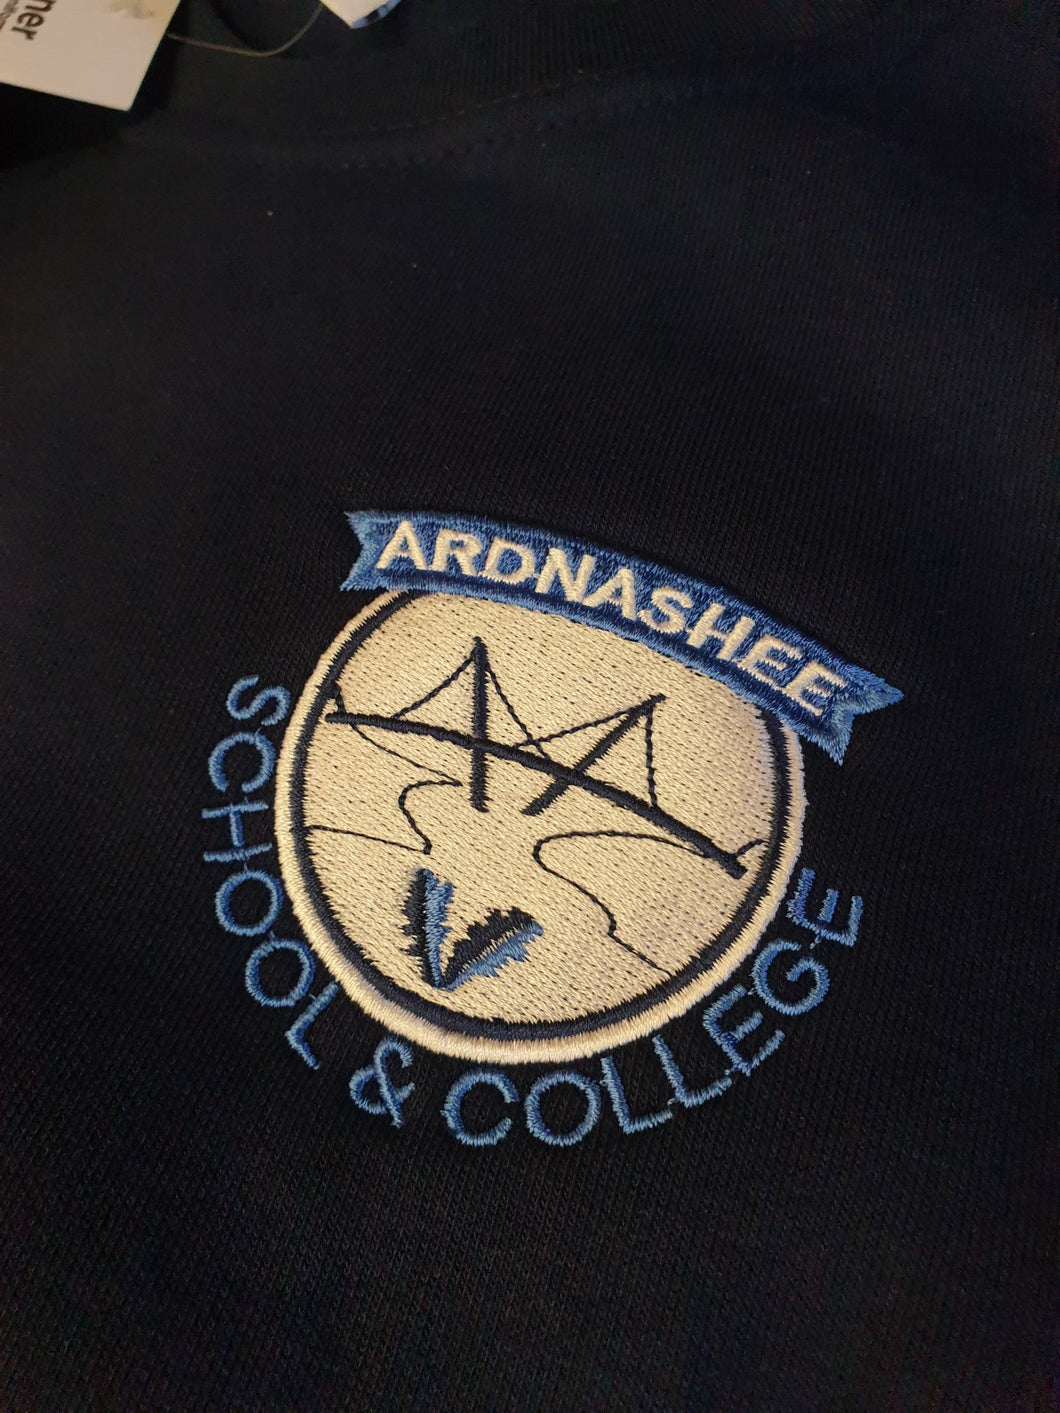 3 x Ardnashee sweatshirt for £39 (SAVE 19%)